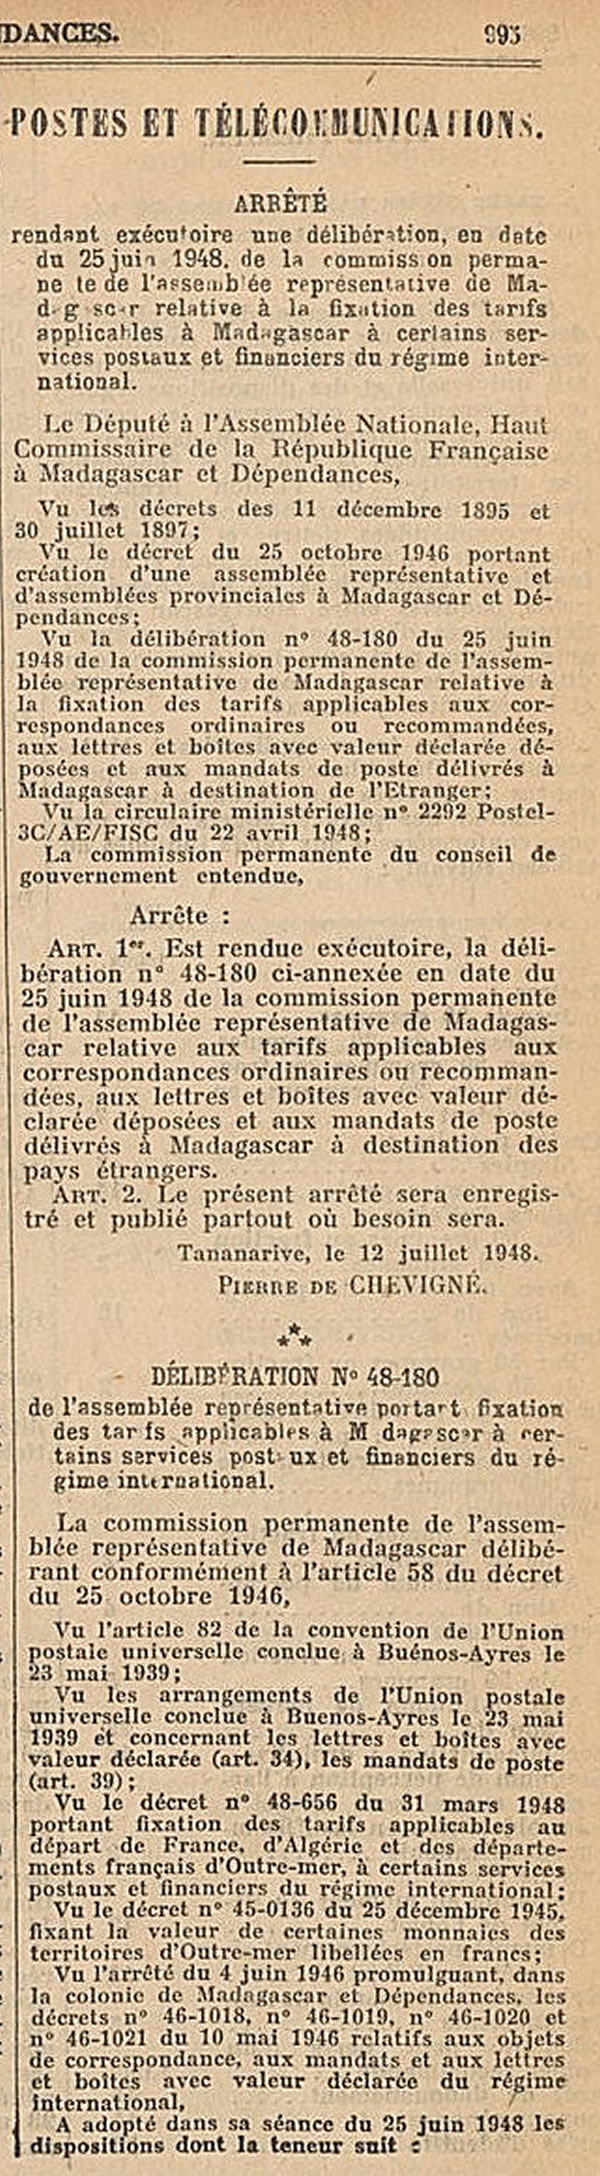 Tarif étranger Madagasacr 1er septembre 1948